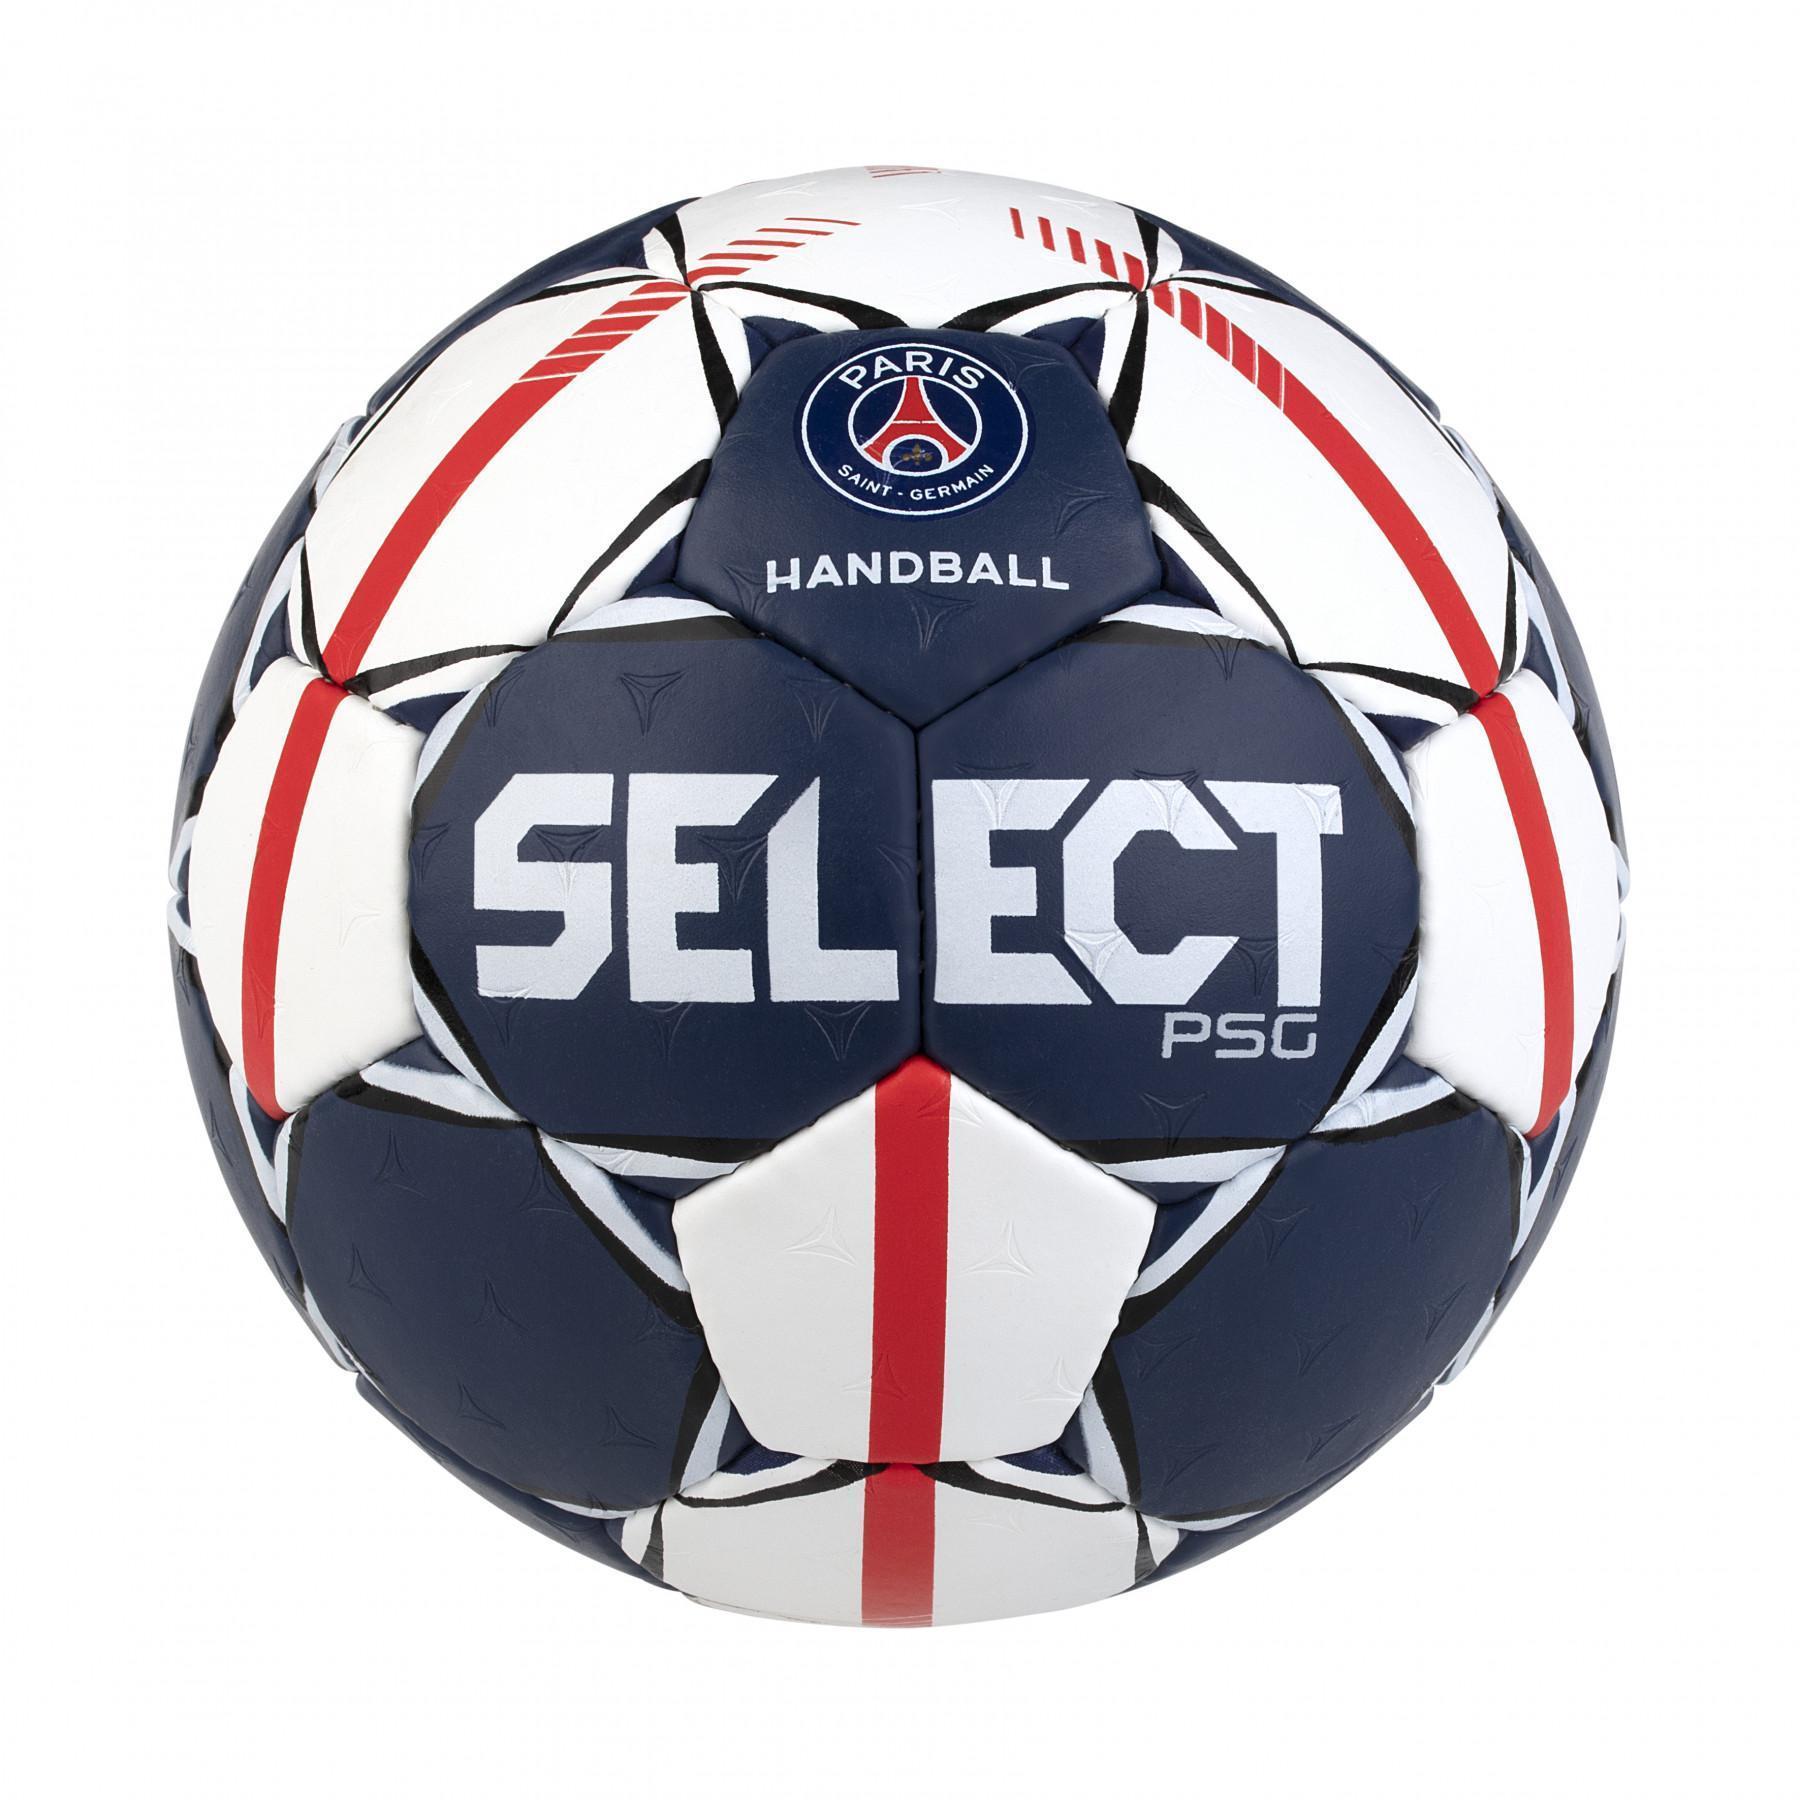 Handboll Select PSG 2020/21